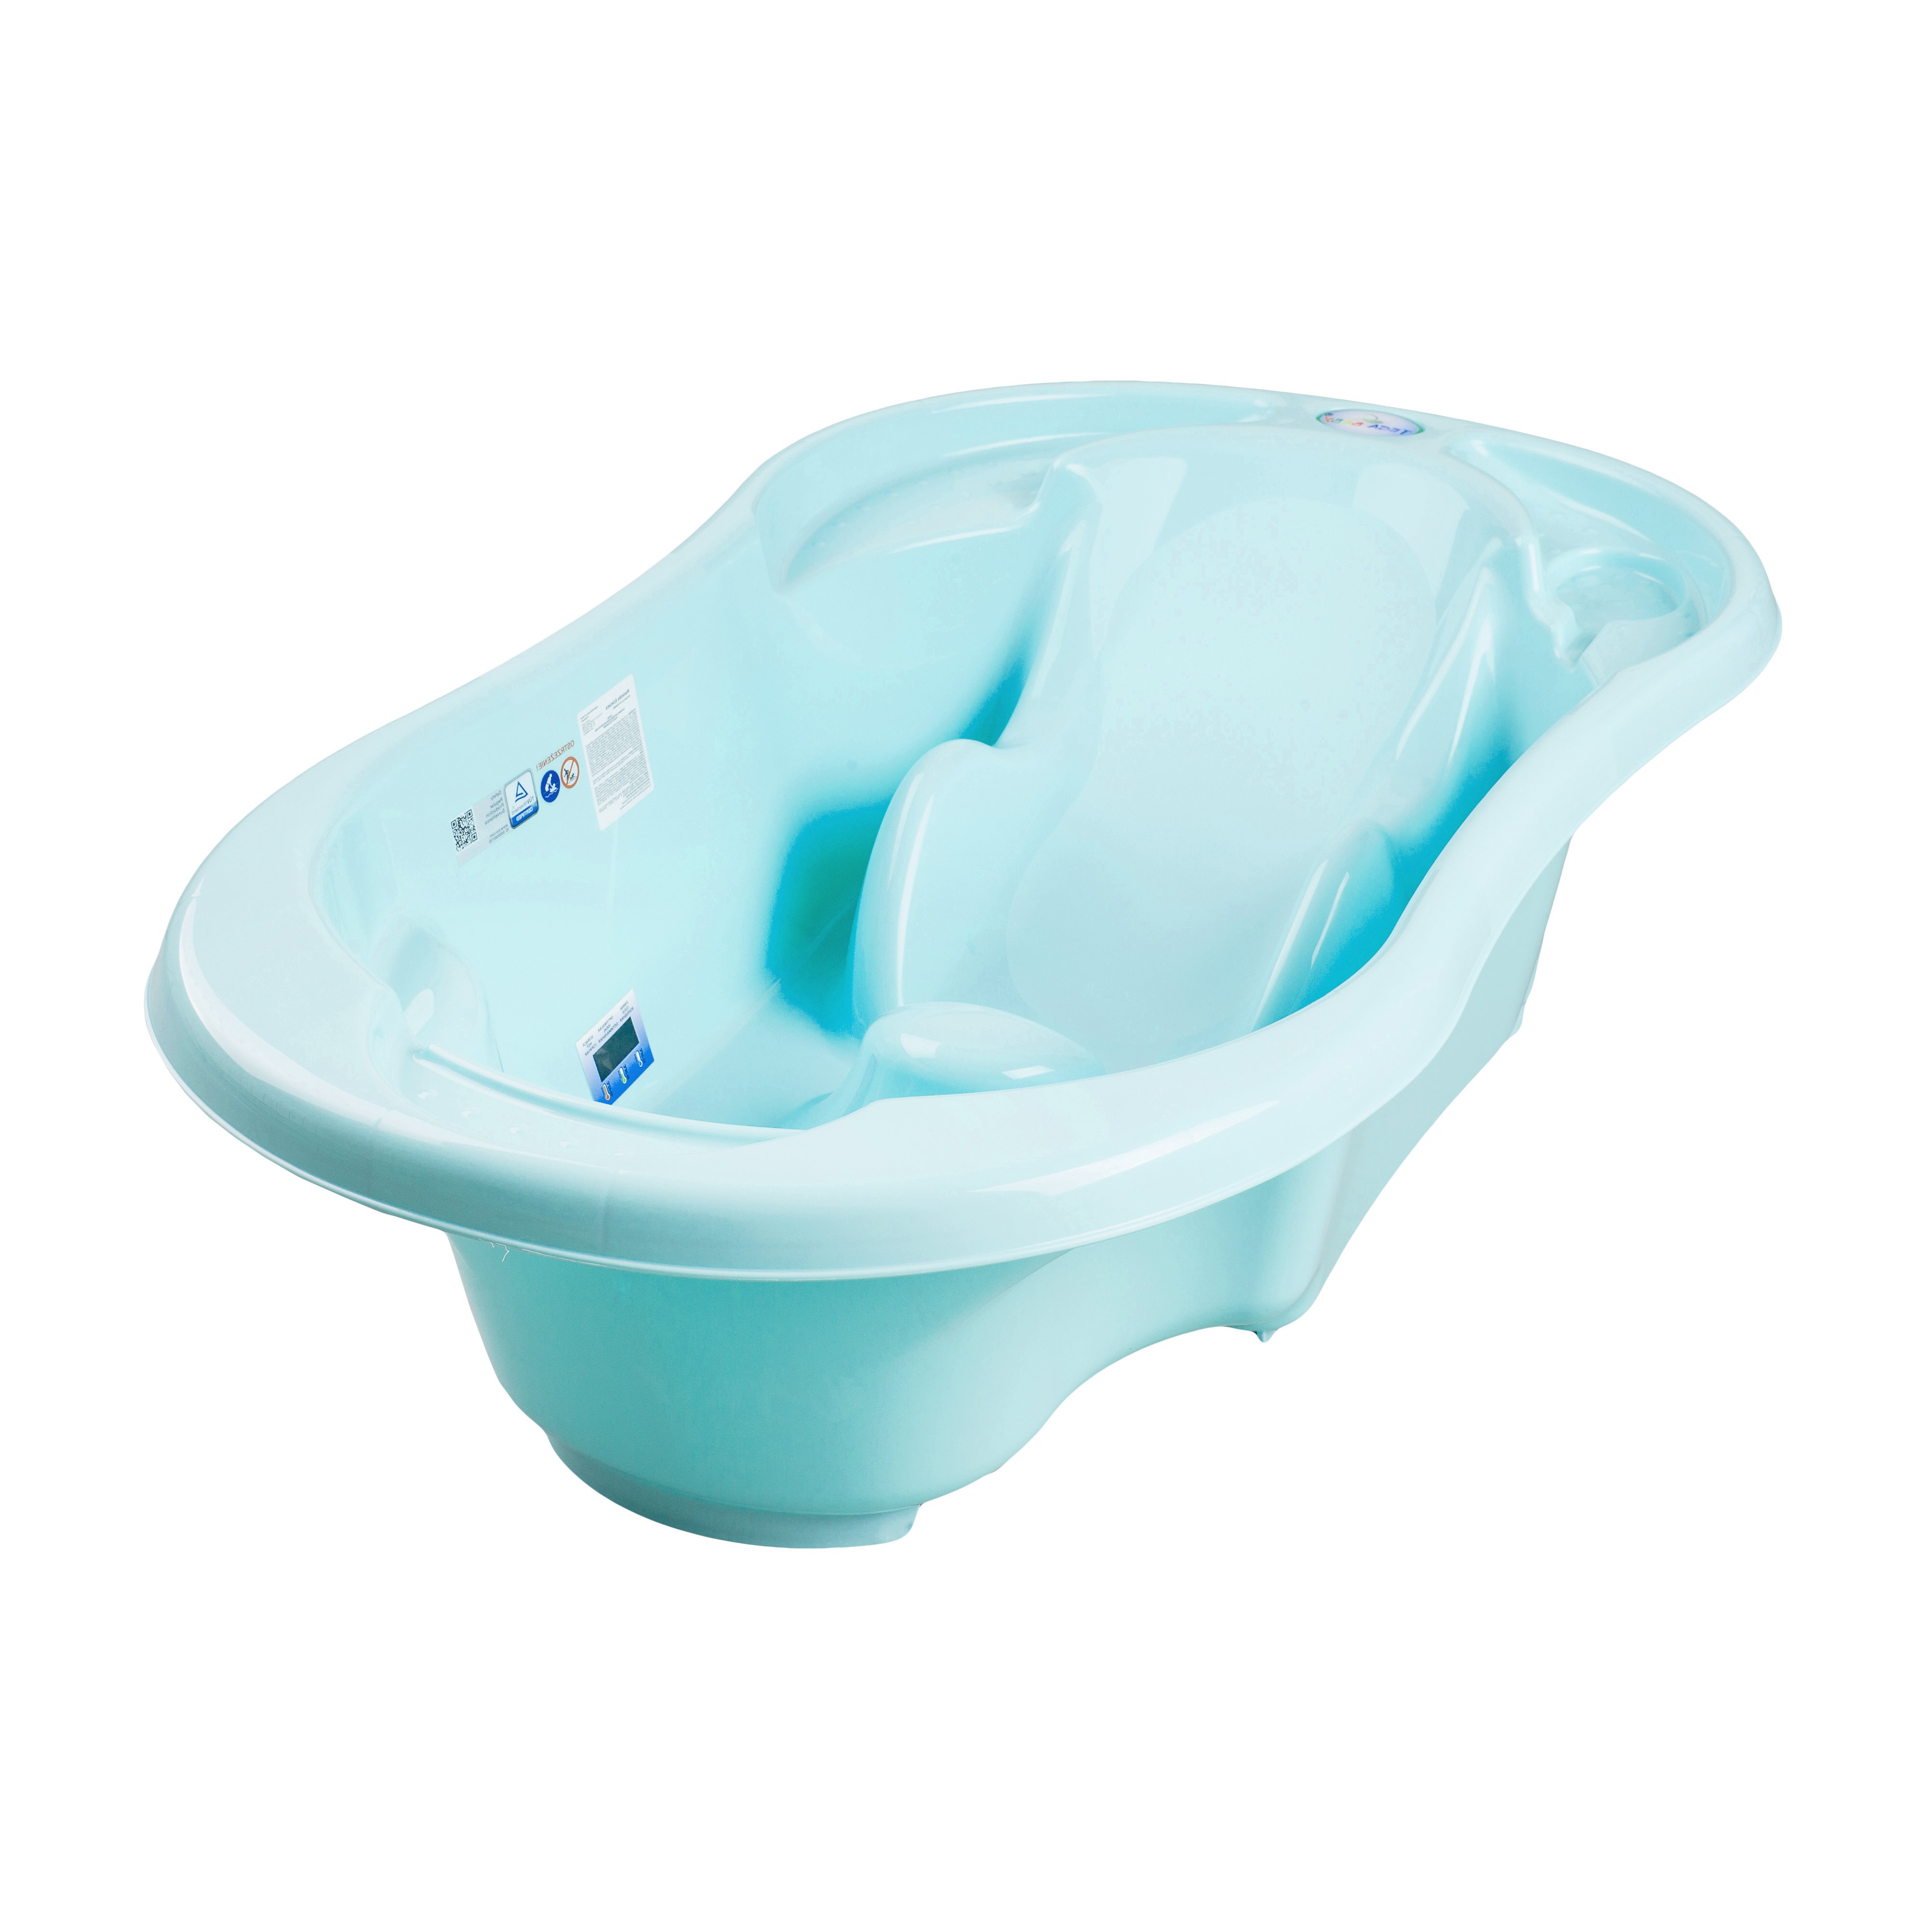 Bērnu vanna anatomiskās formas TegaBaby COMFORT light blue TG-011